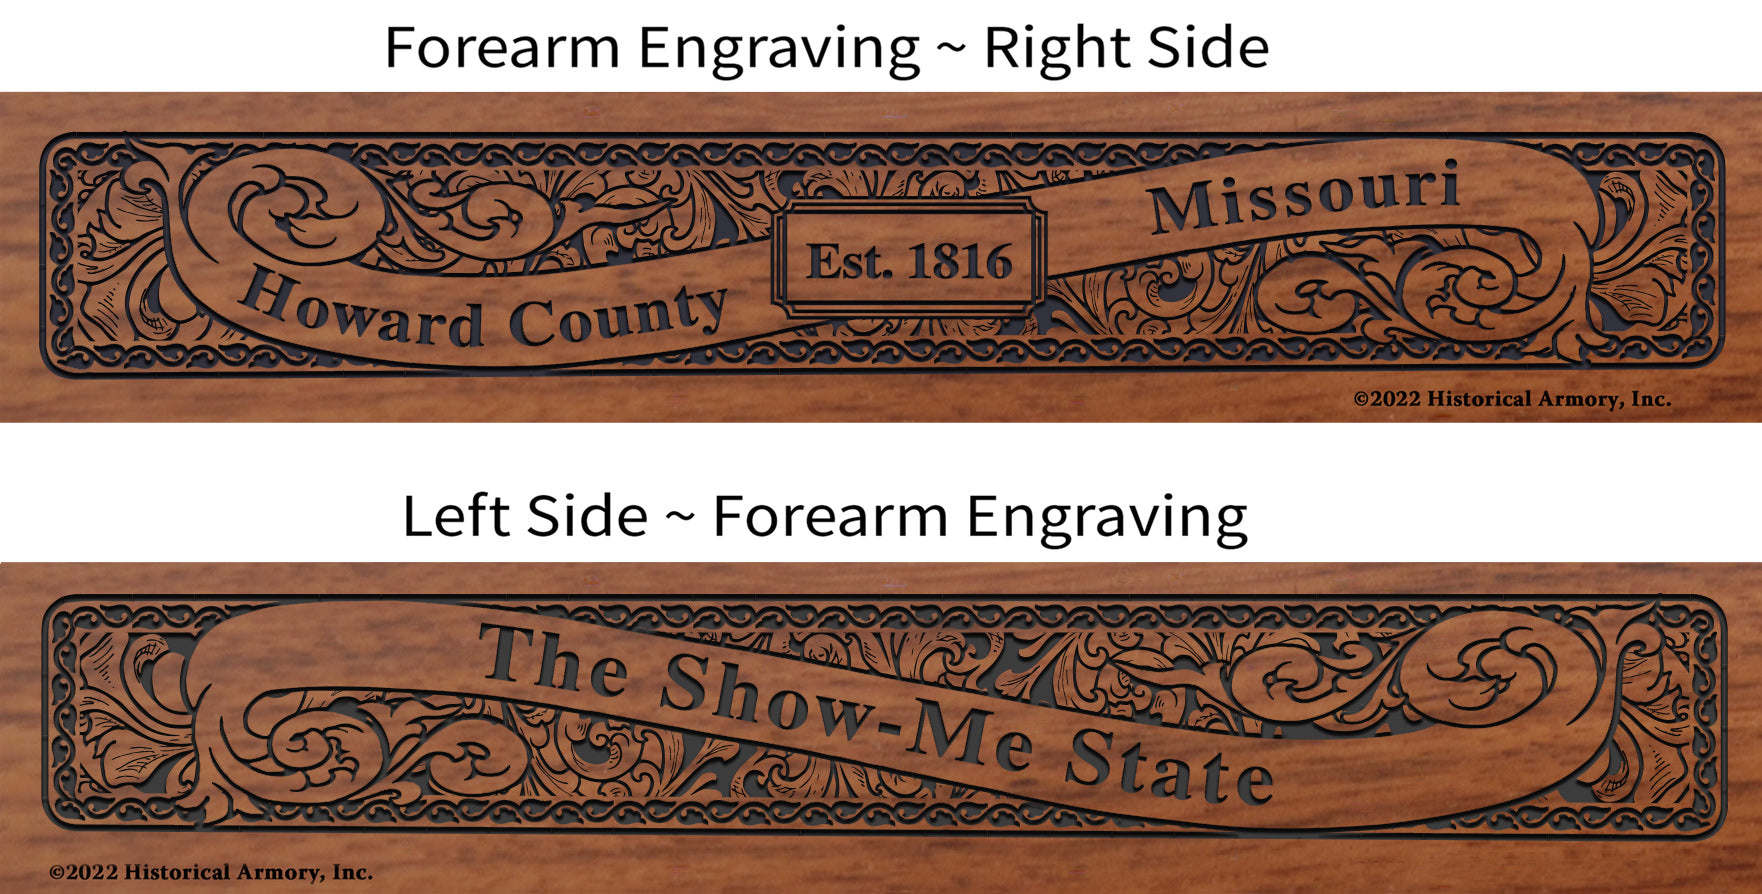 Howard County Missouri Engraved Rifle Forearm